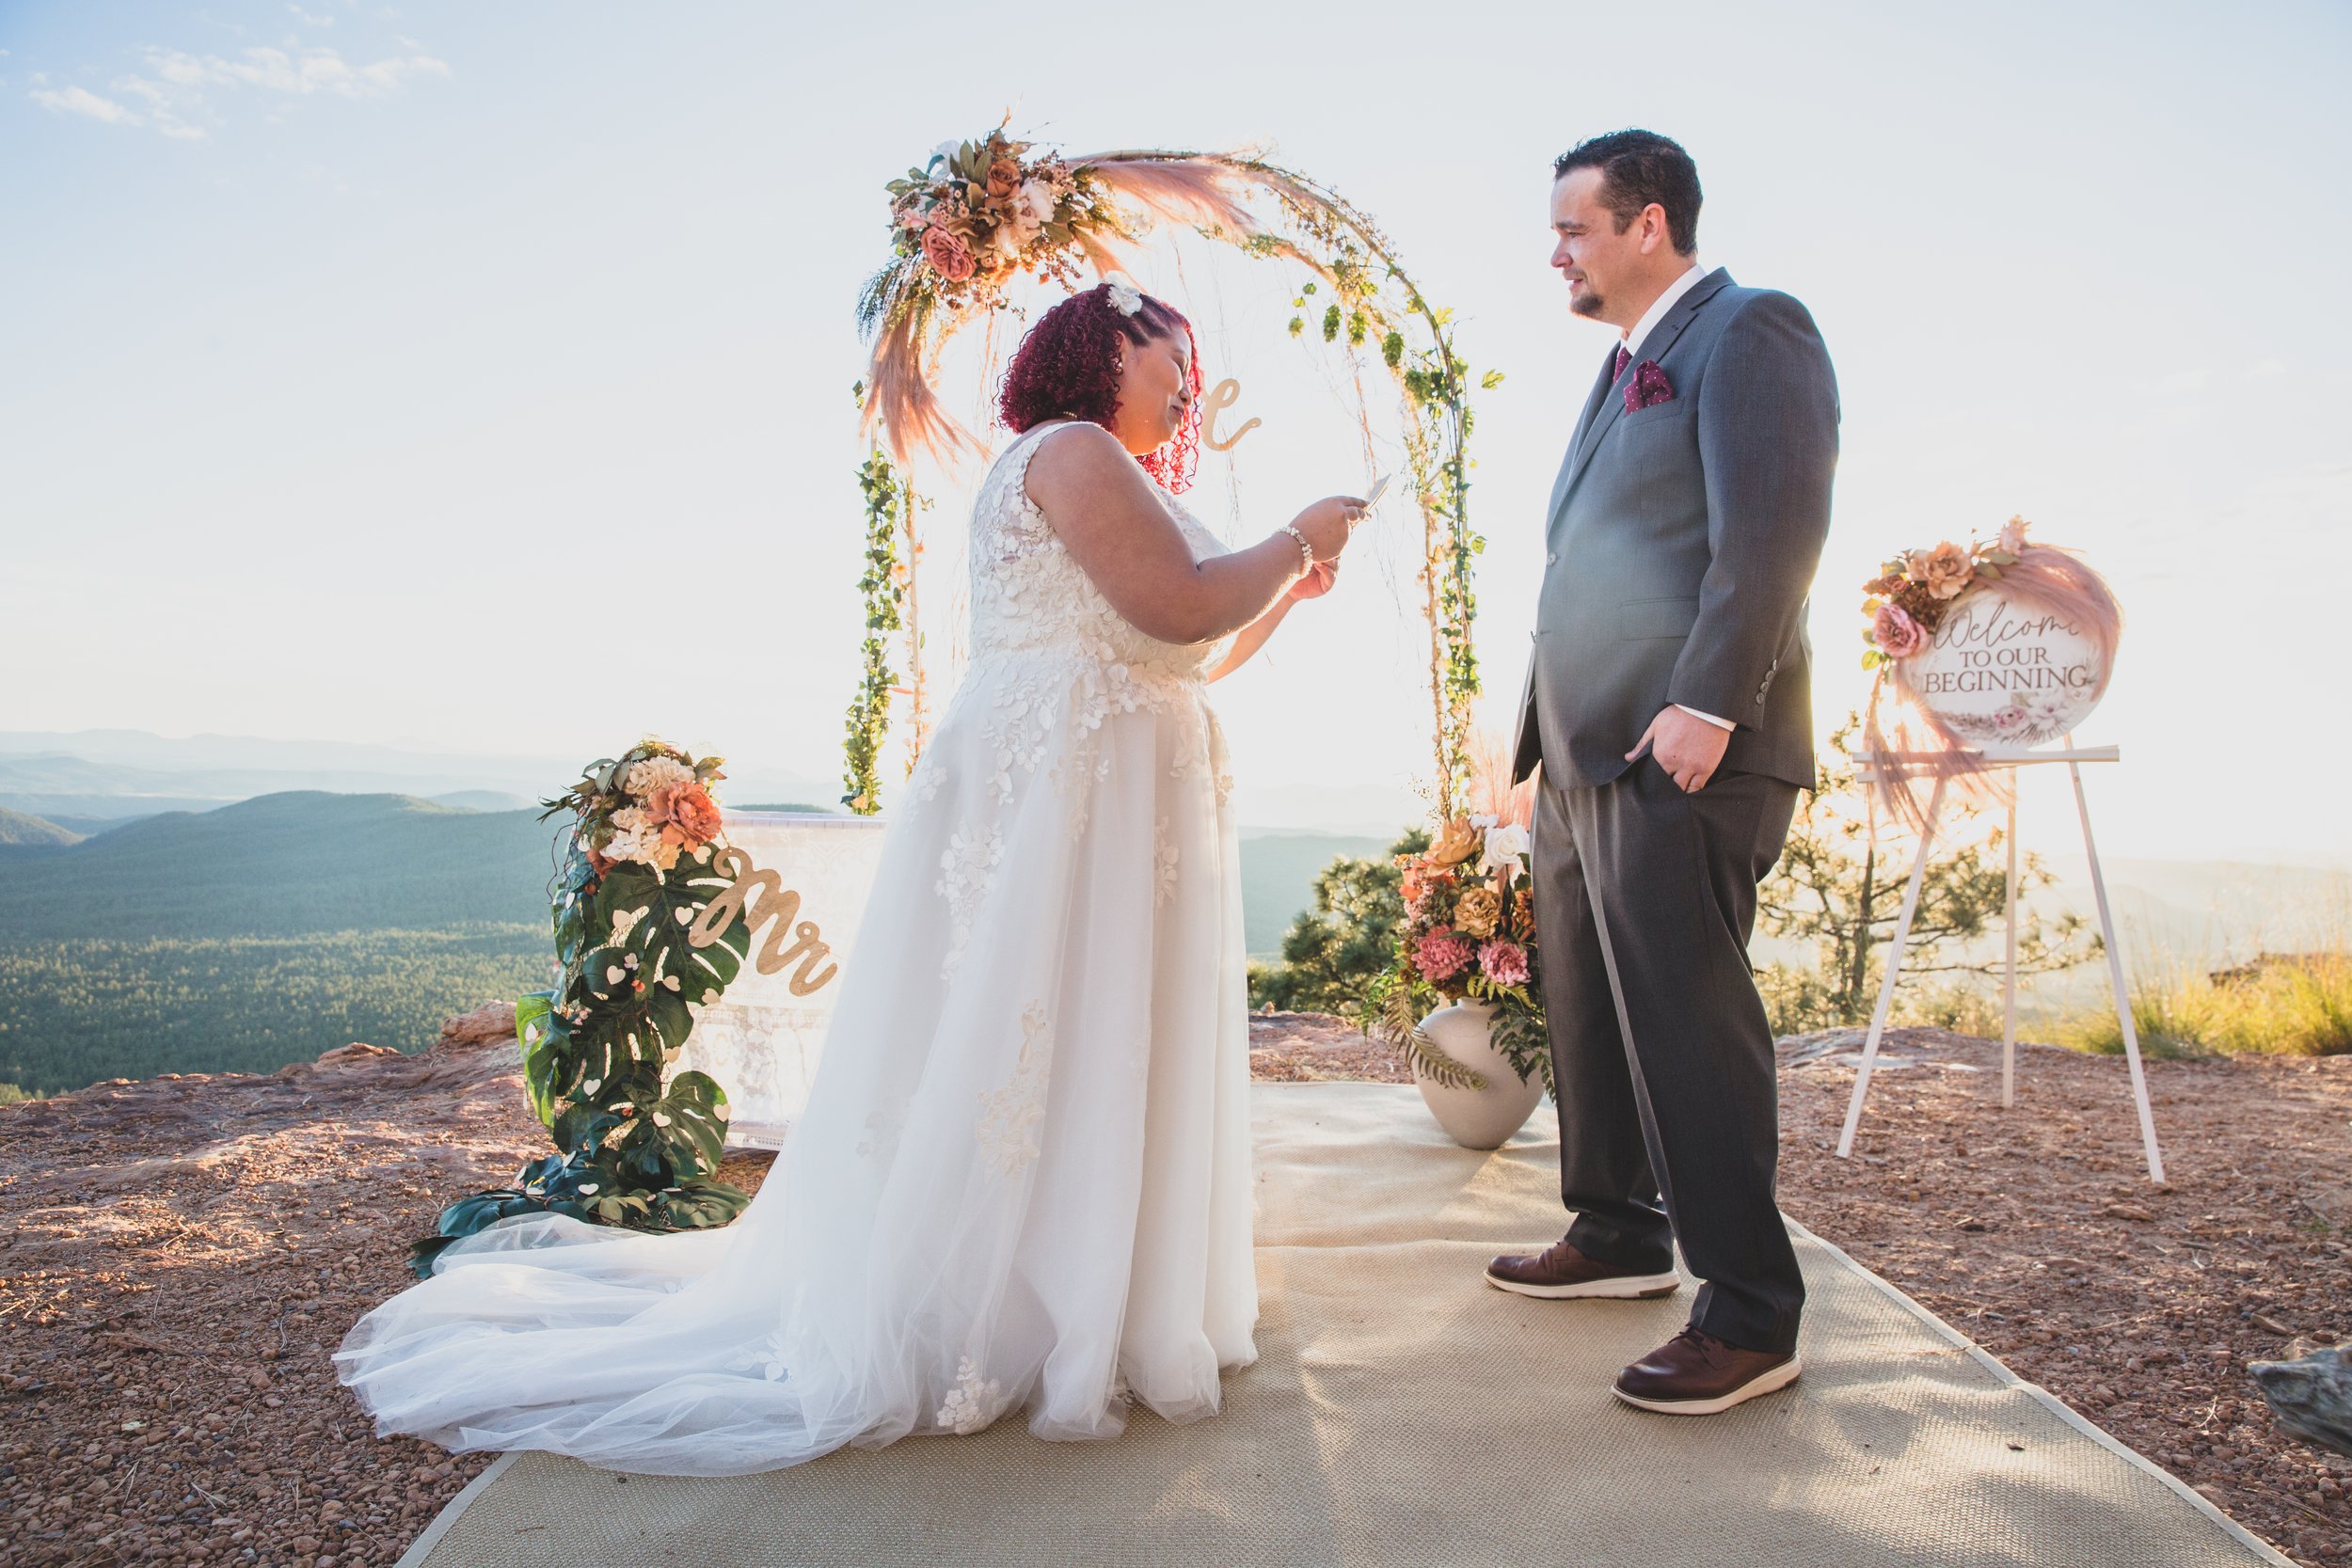  Wedding Ceremony at Northern Arizona Rim Elopement by Northern Arizona Photographer Jennifer Lind Schutsky 